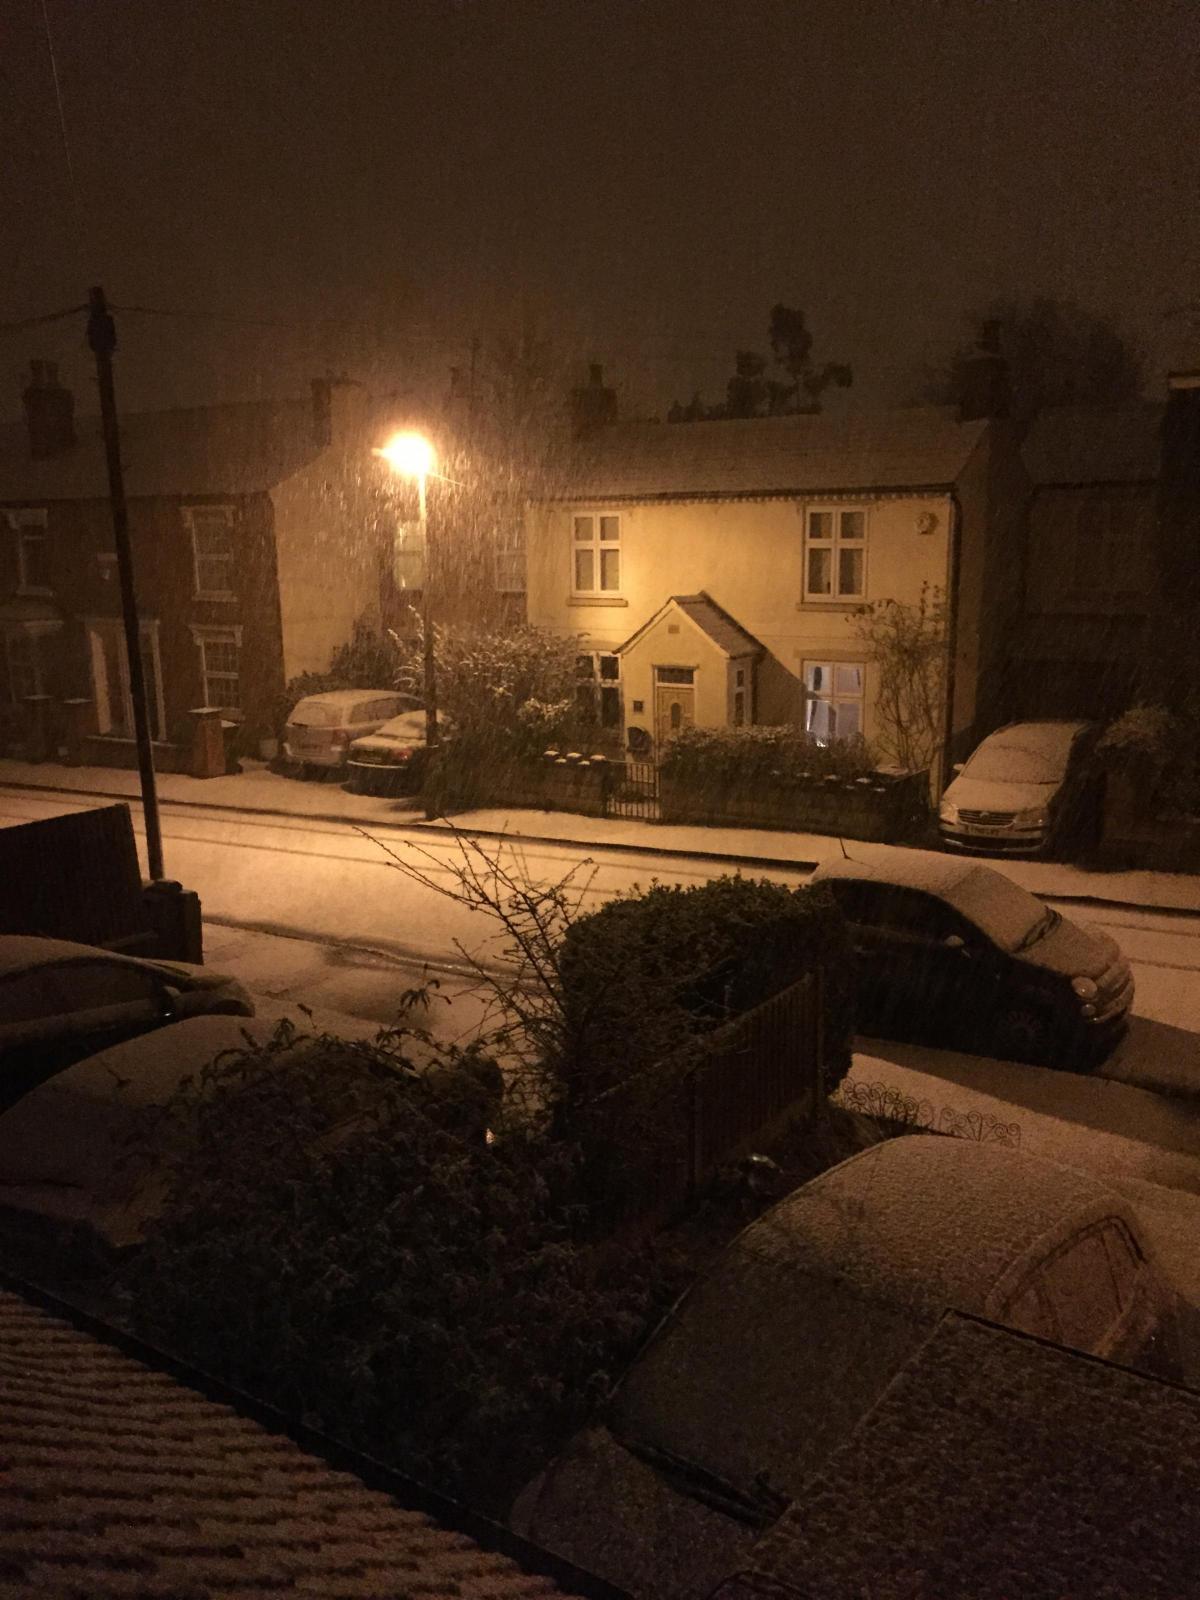 Snowy scene at Stourbridge's Old Quarter at 9.30pm last night taken by Michael Morgan.